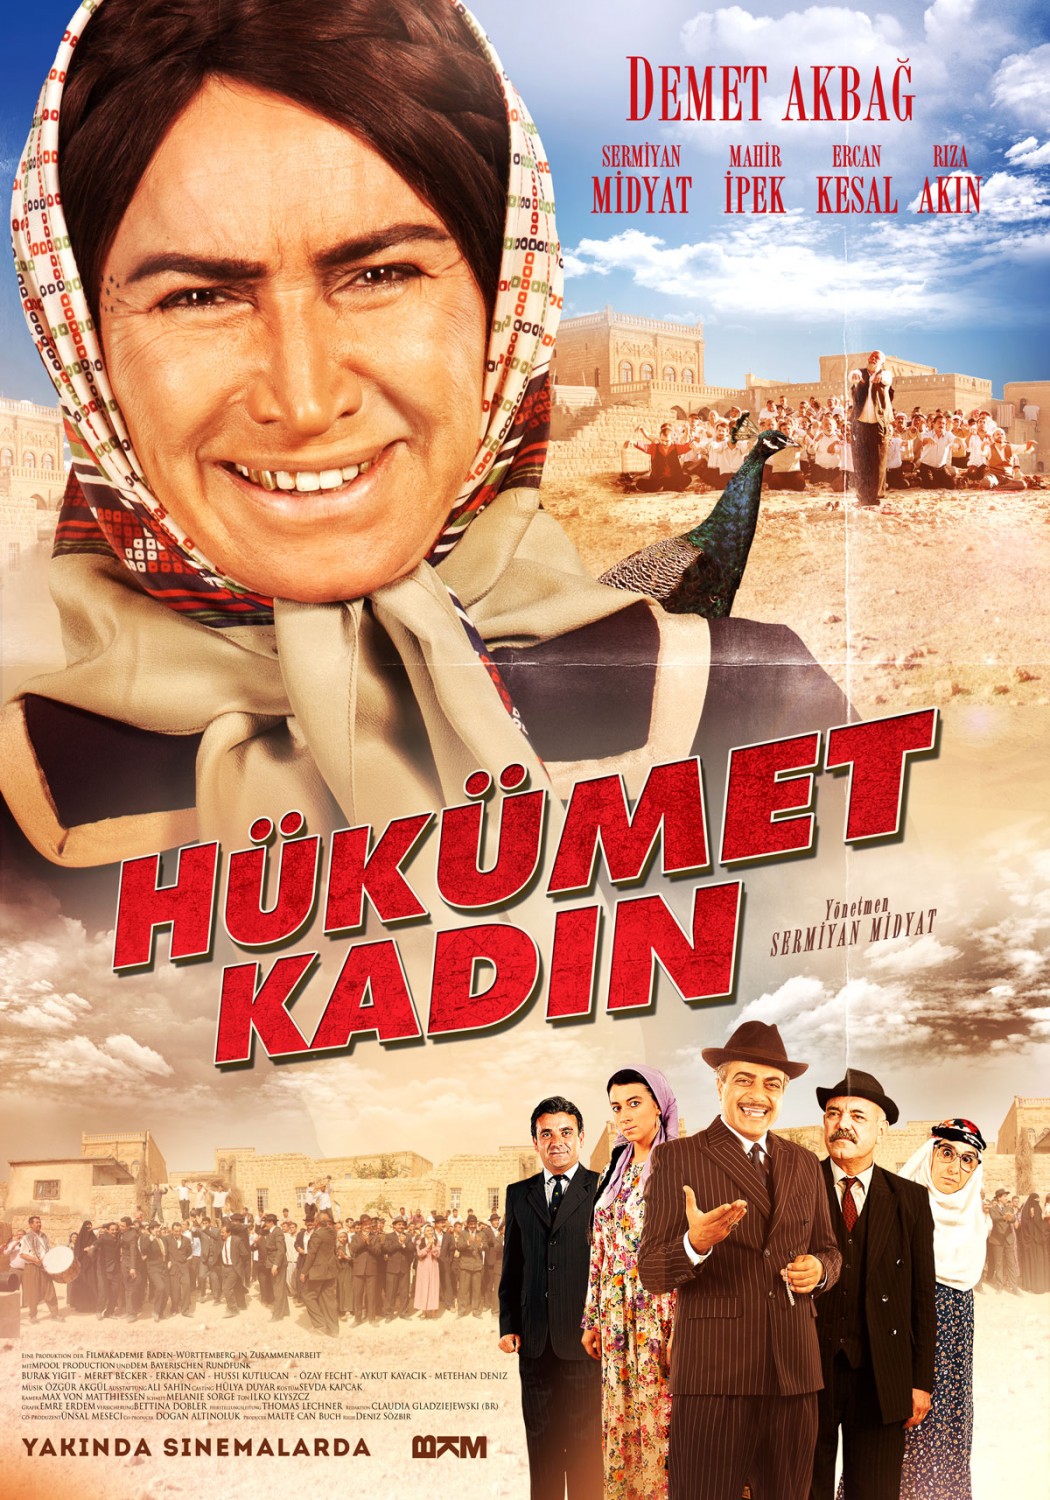 Extra Large Movie Poster Image for Hükümet kadin (#5 of 6)